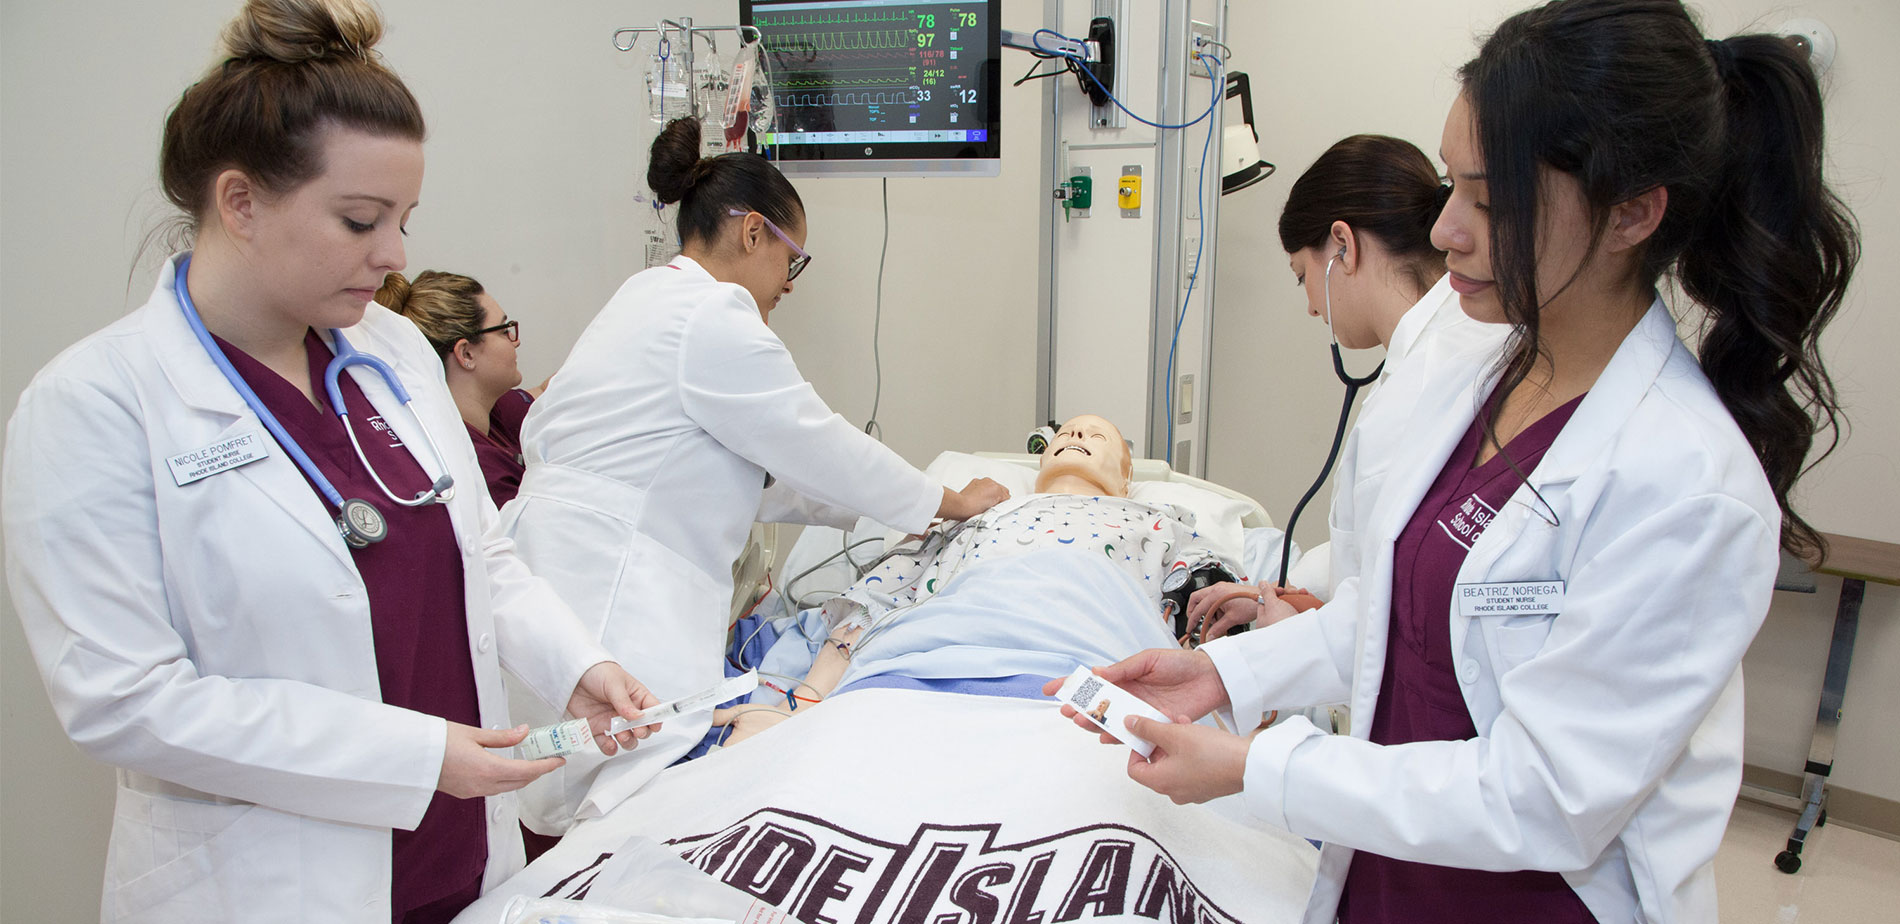 Zvart Onanian School of Nursing Simulation Program | Rhode Island College